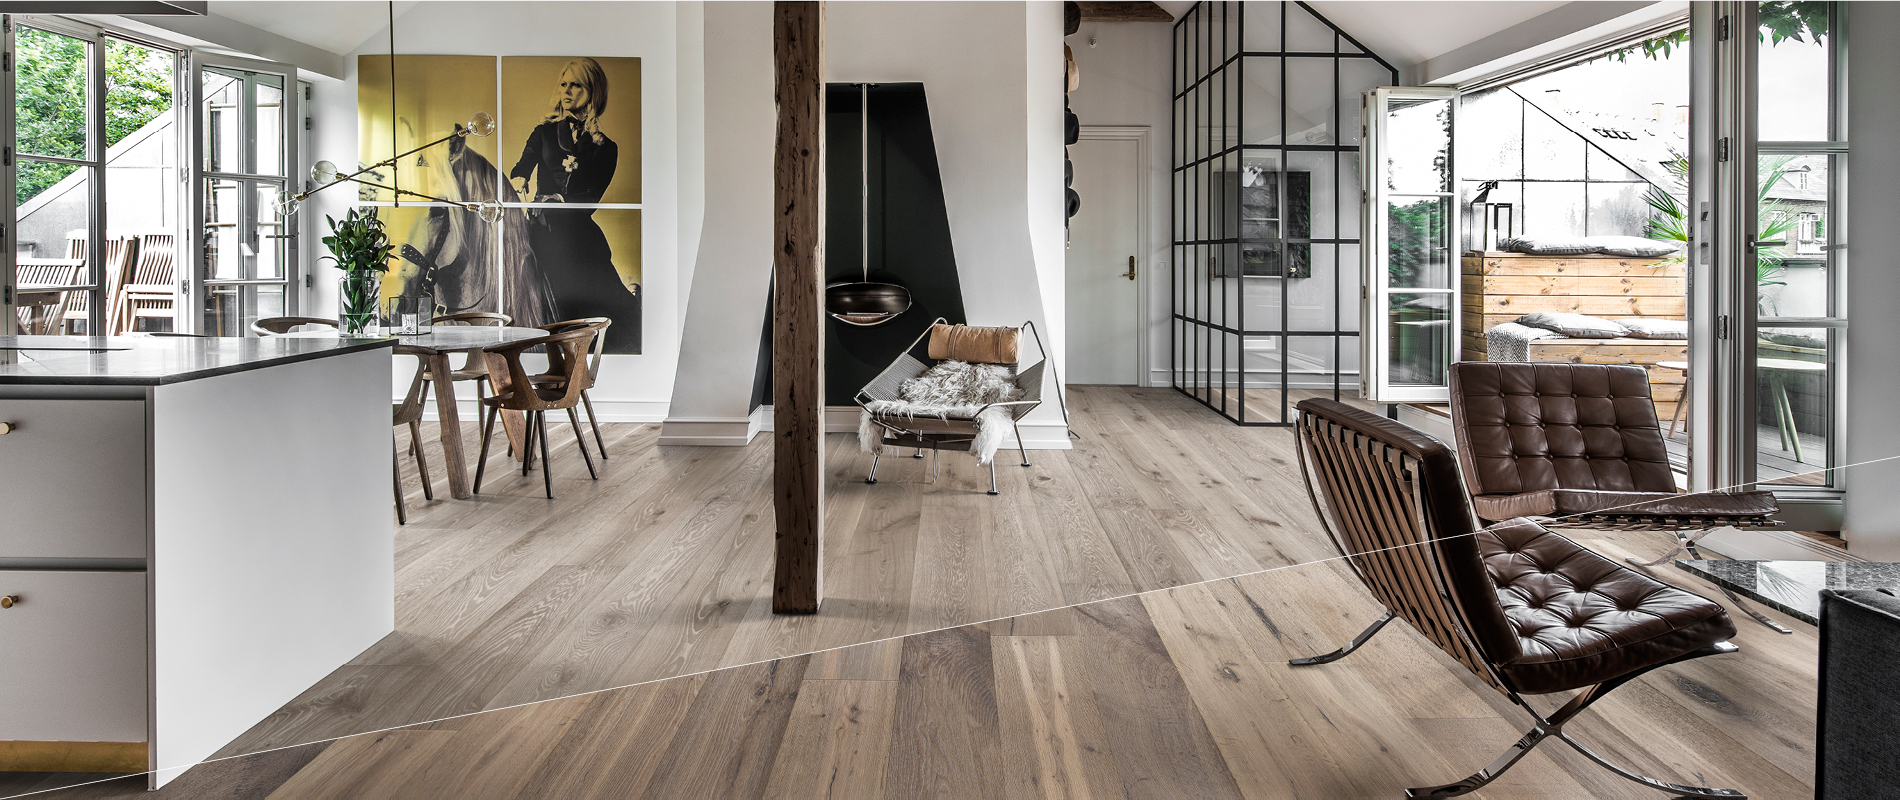 Kährs Makes Flooring The Easy Choice, Furniture And Hardwood Floors